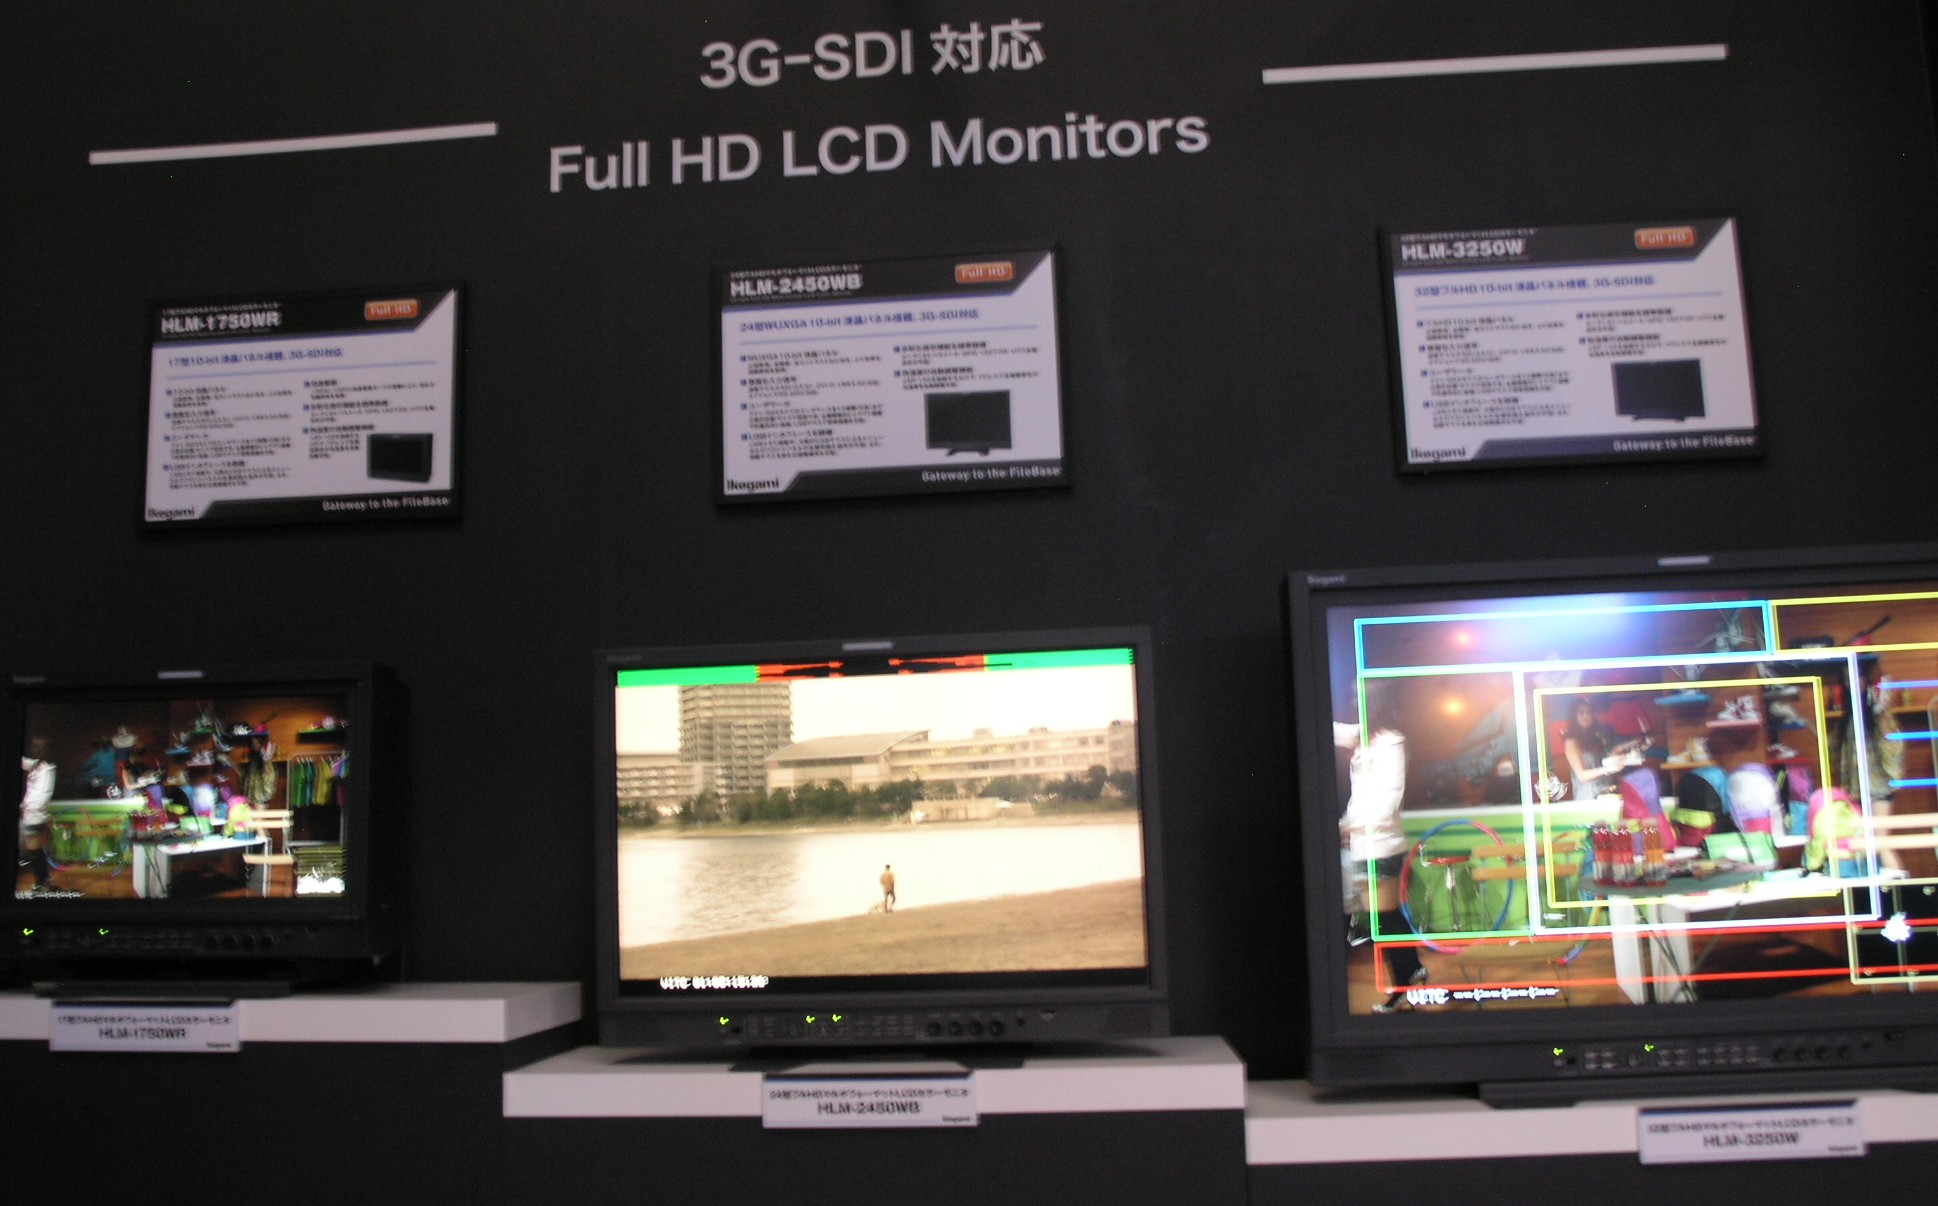 High resolution LCD monitor with 3G-SDI support (Ikegami Tsushinki)